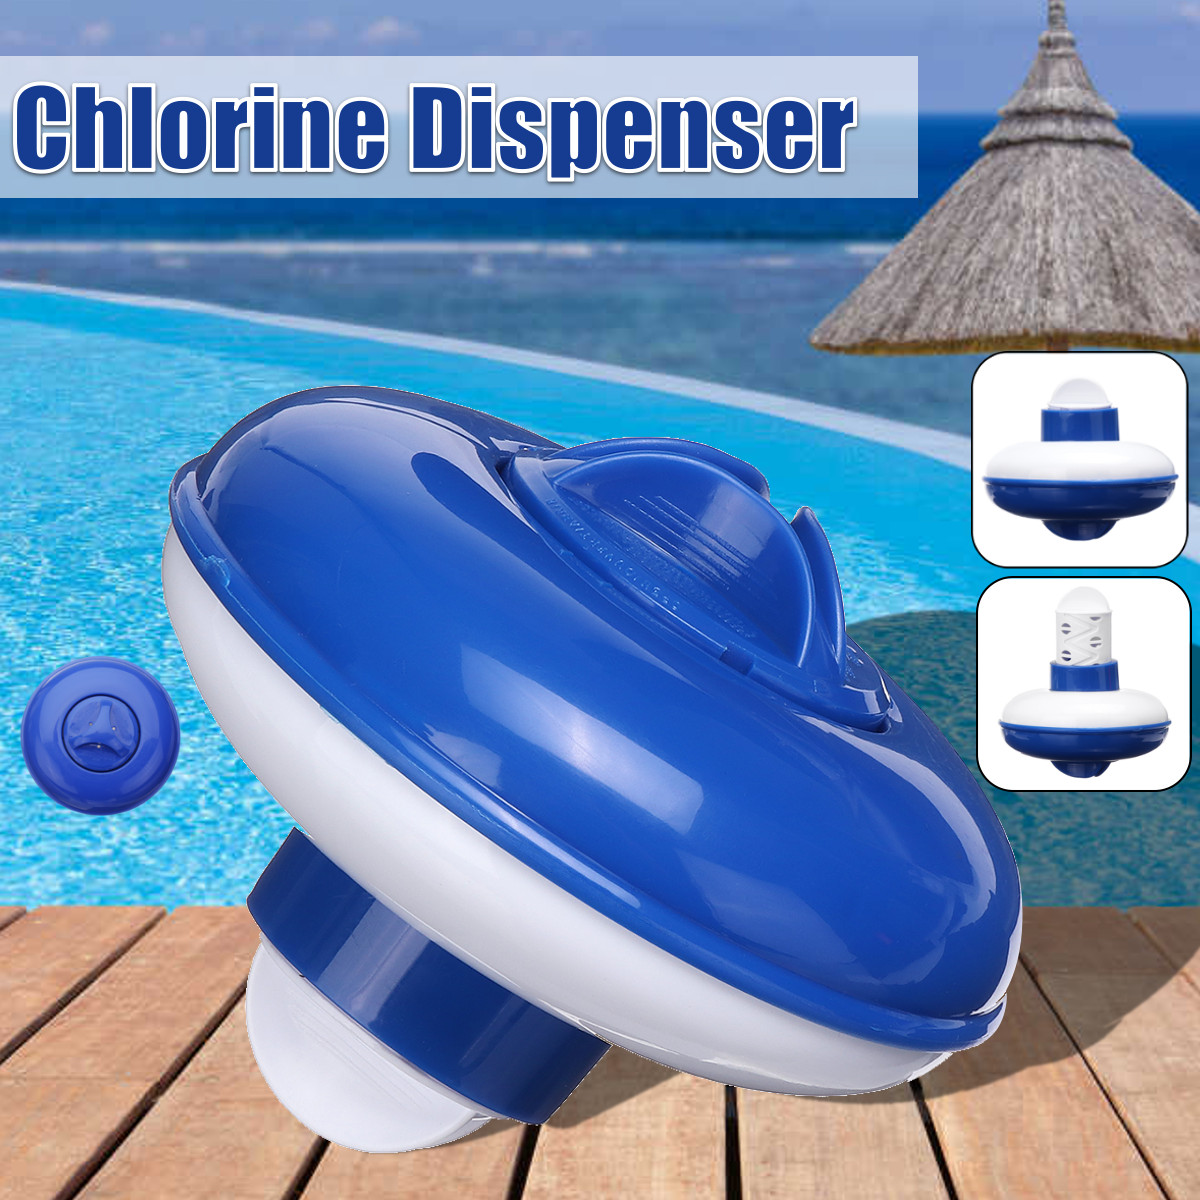 Floating-Dispenser-Floater-Swimming-Pool-Clean-Equipment-1700861-1